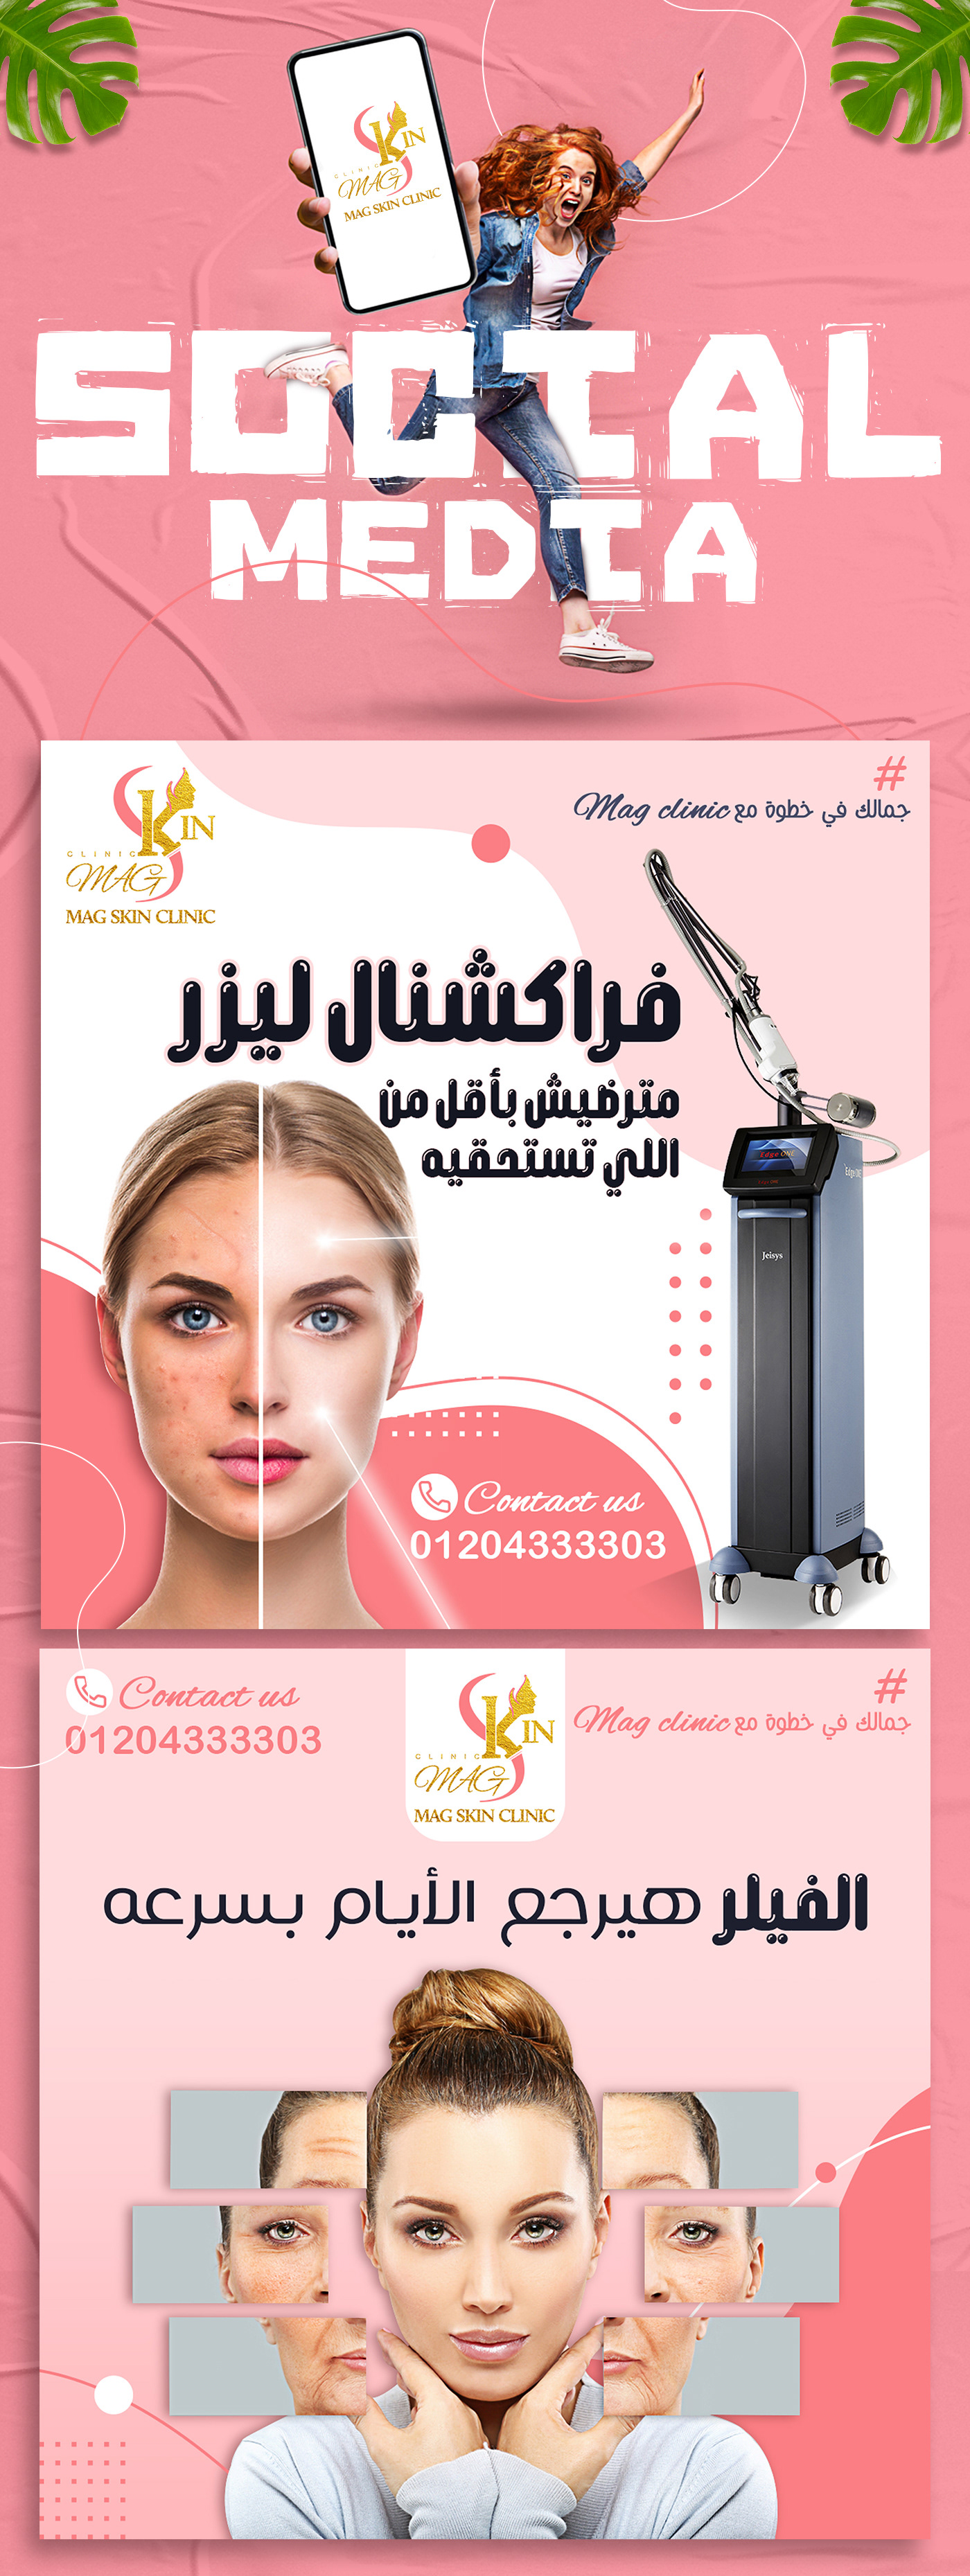 Advertising  Beauty Clinic medical Skin beauty center skin care Social media post Socialmedia